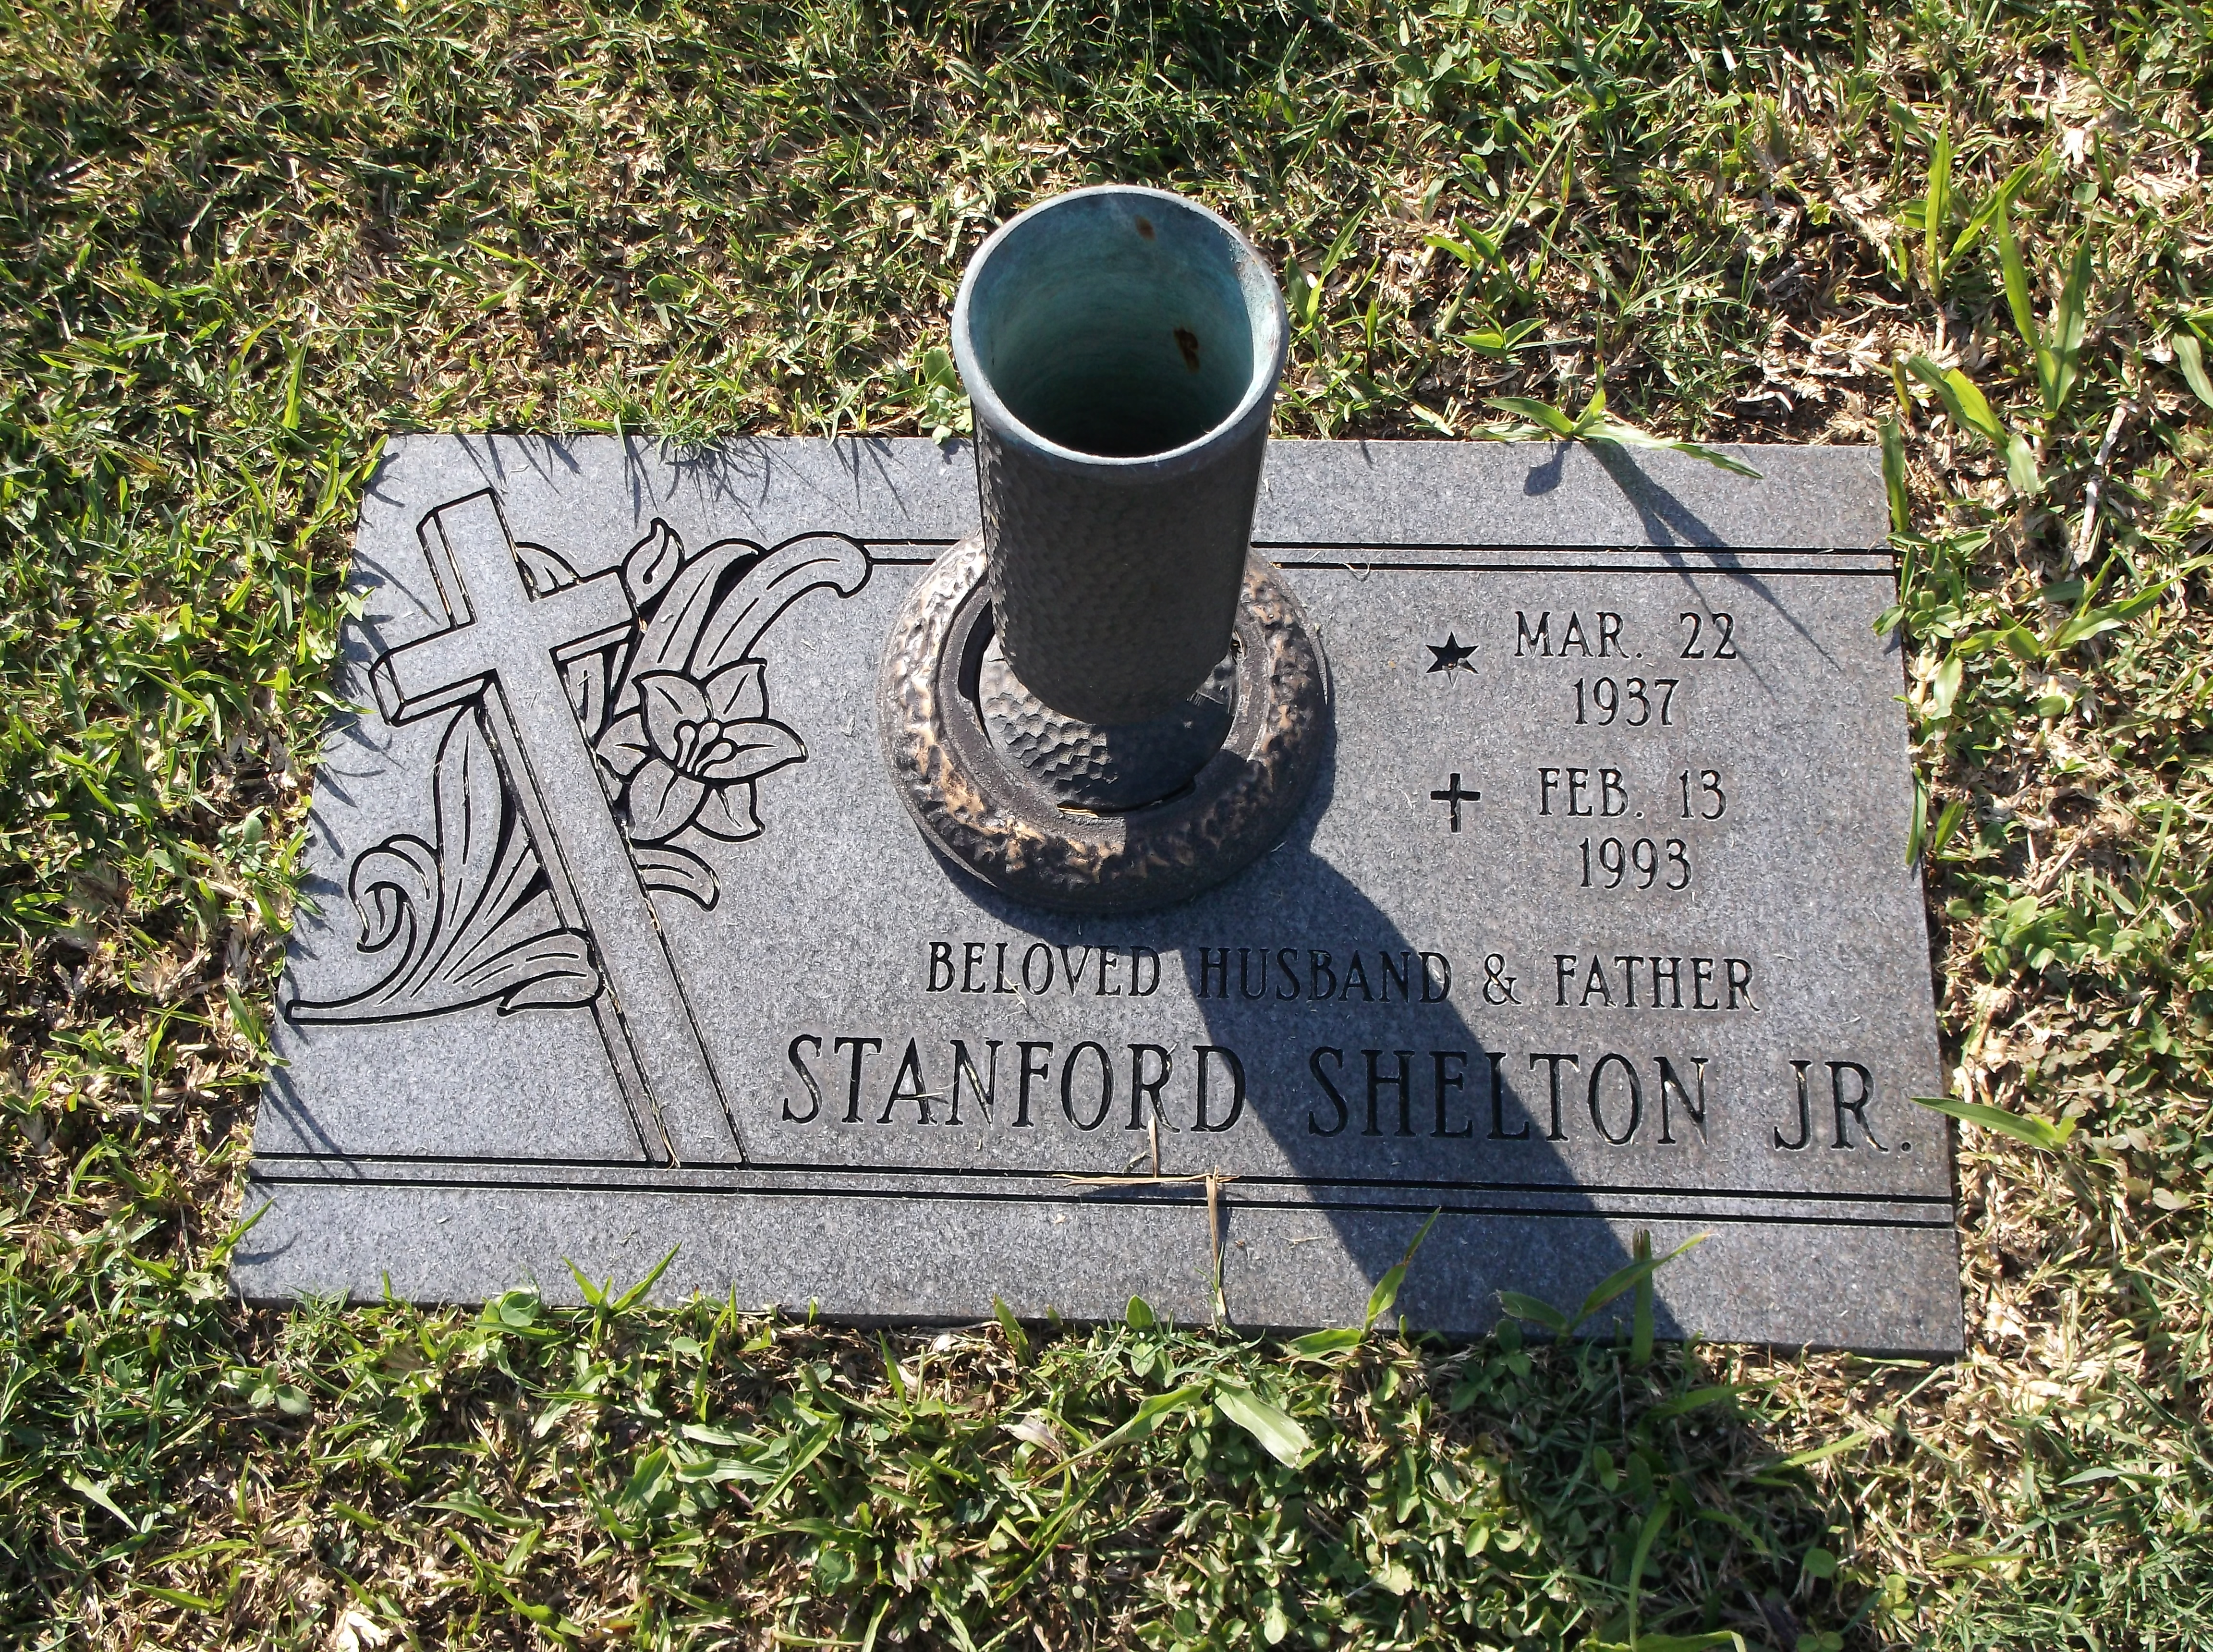 Stanford Shelton, Jr